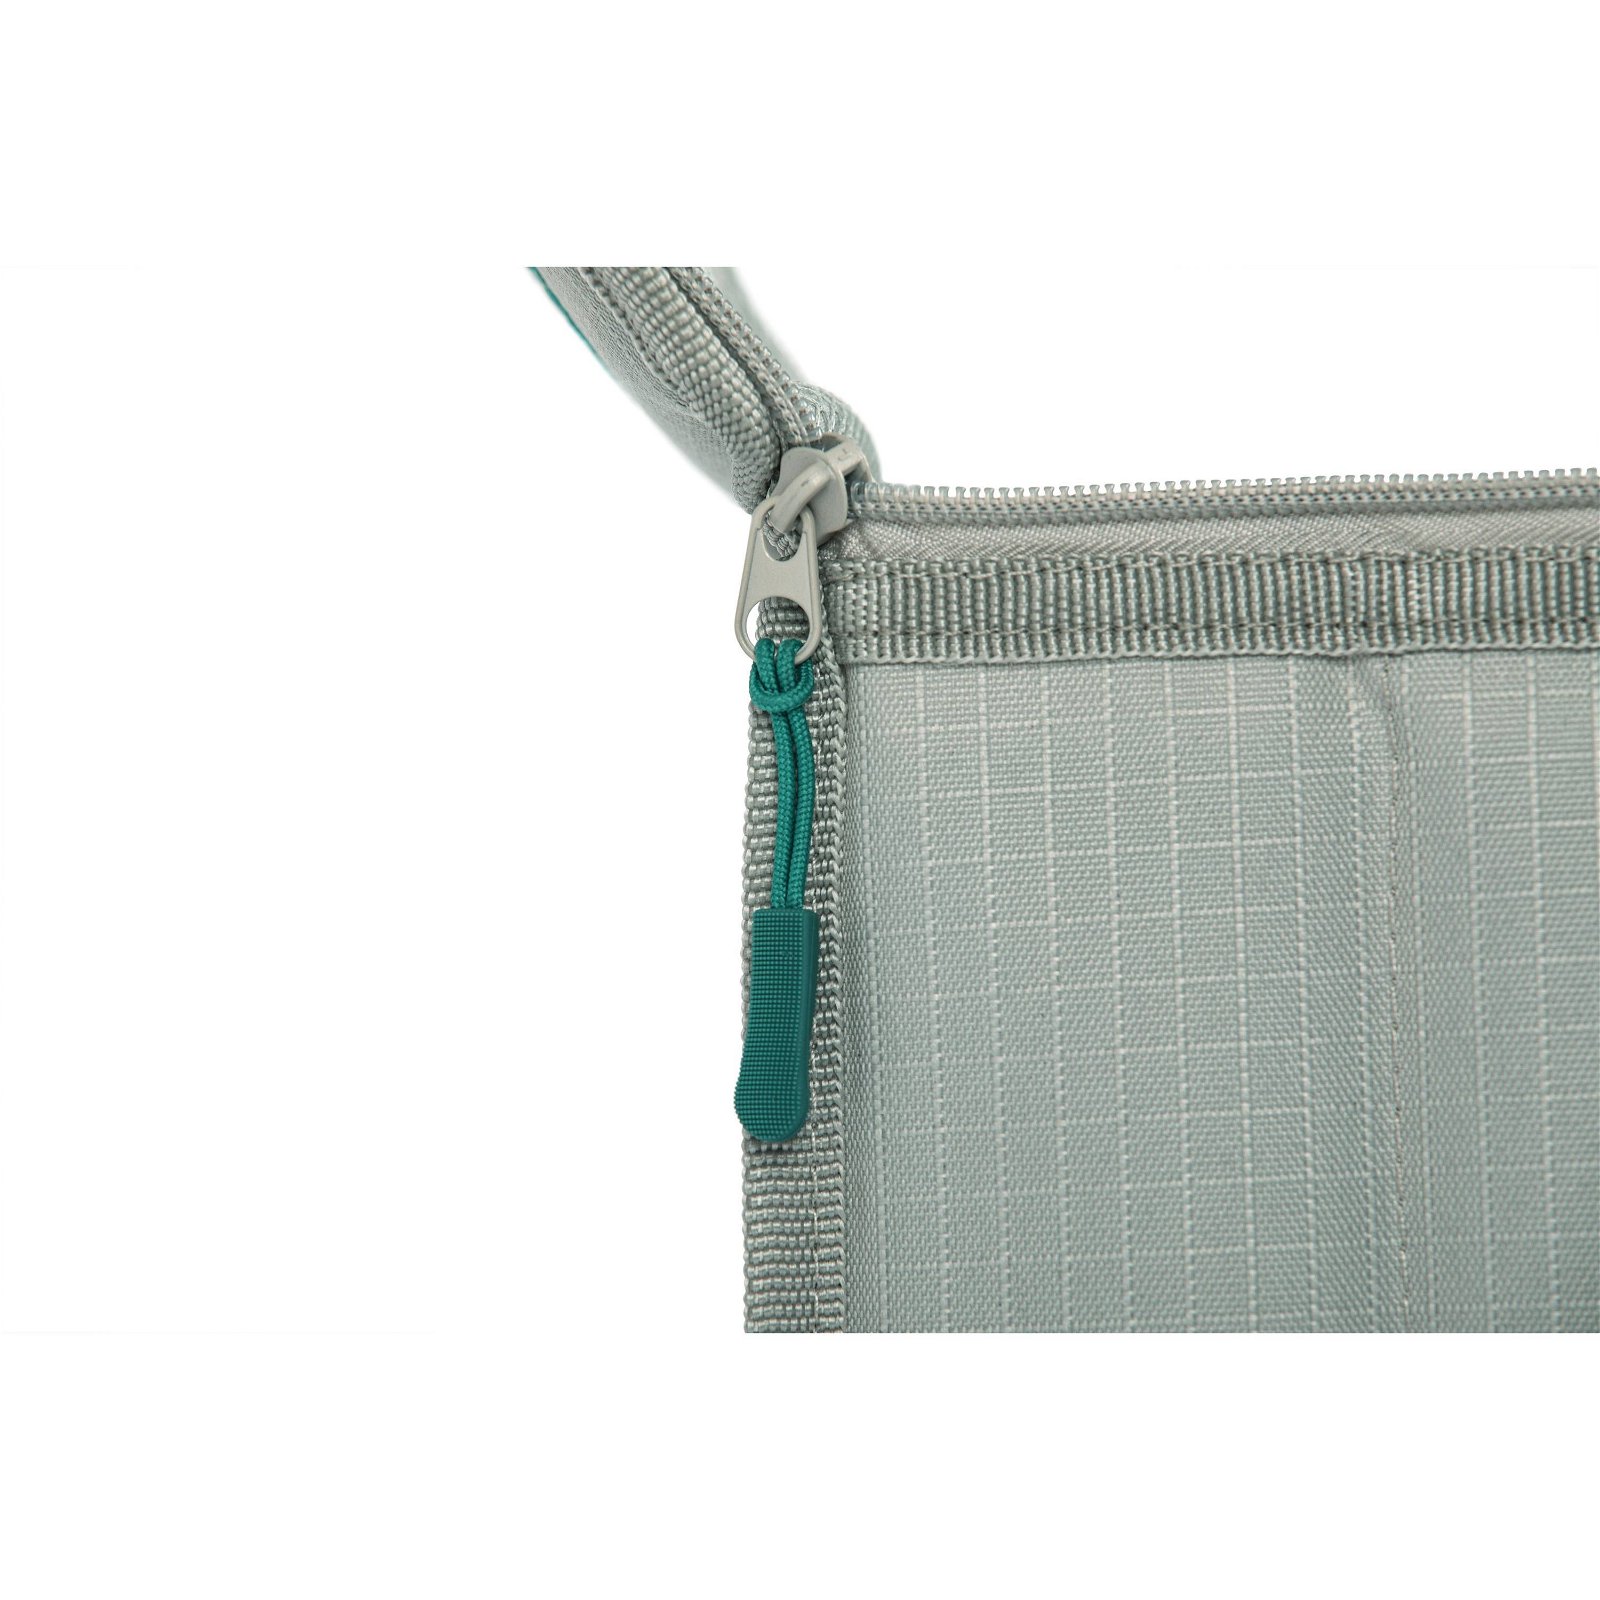 Transporttasche für Sturmlaterne 'Baby Special 276', grau, 29 x 15 x 15 cm